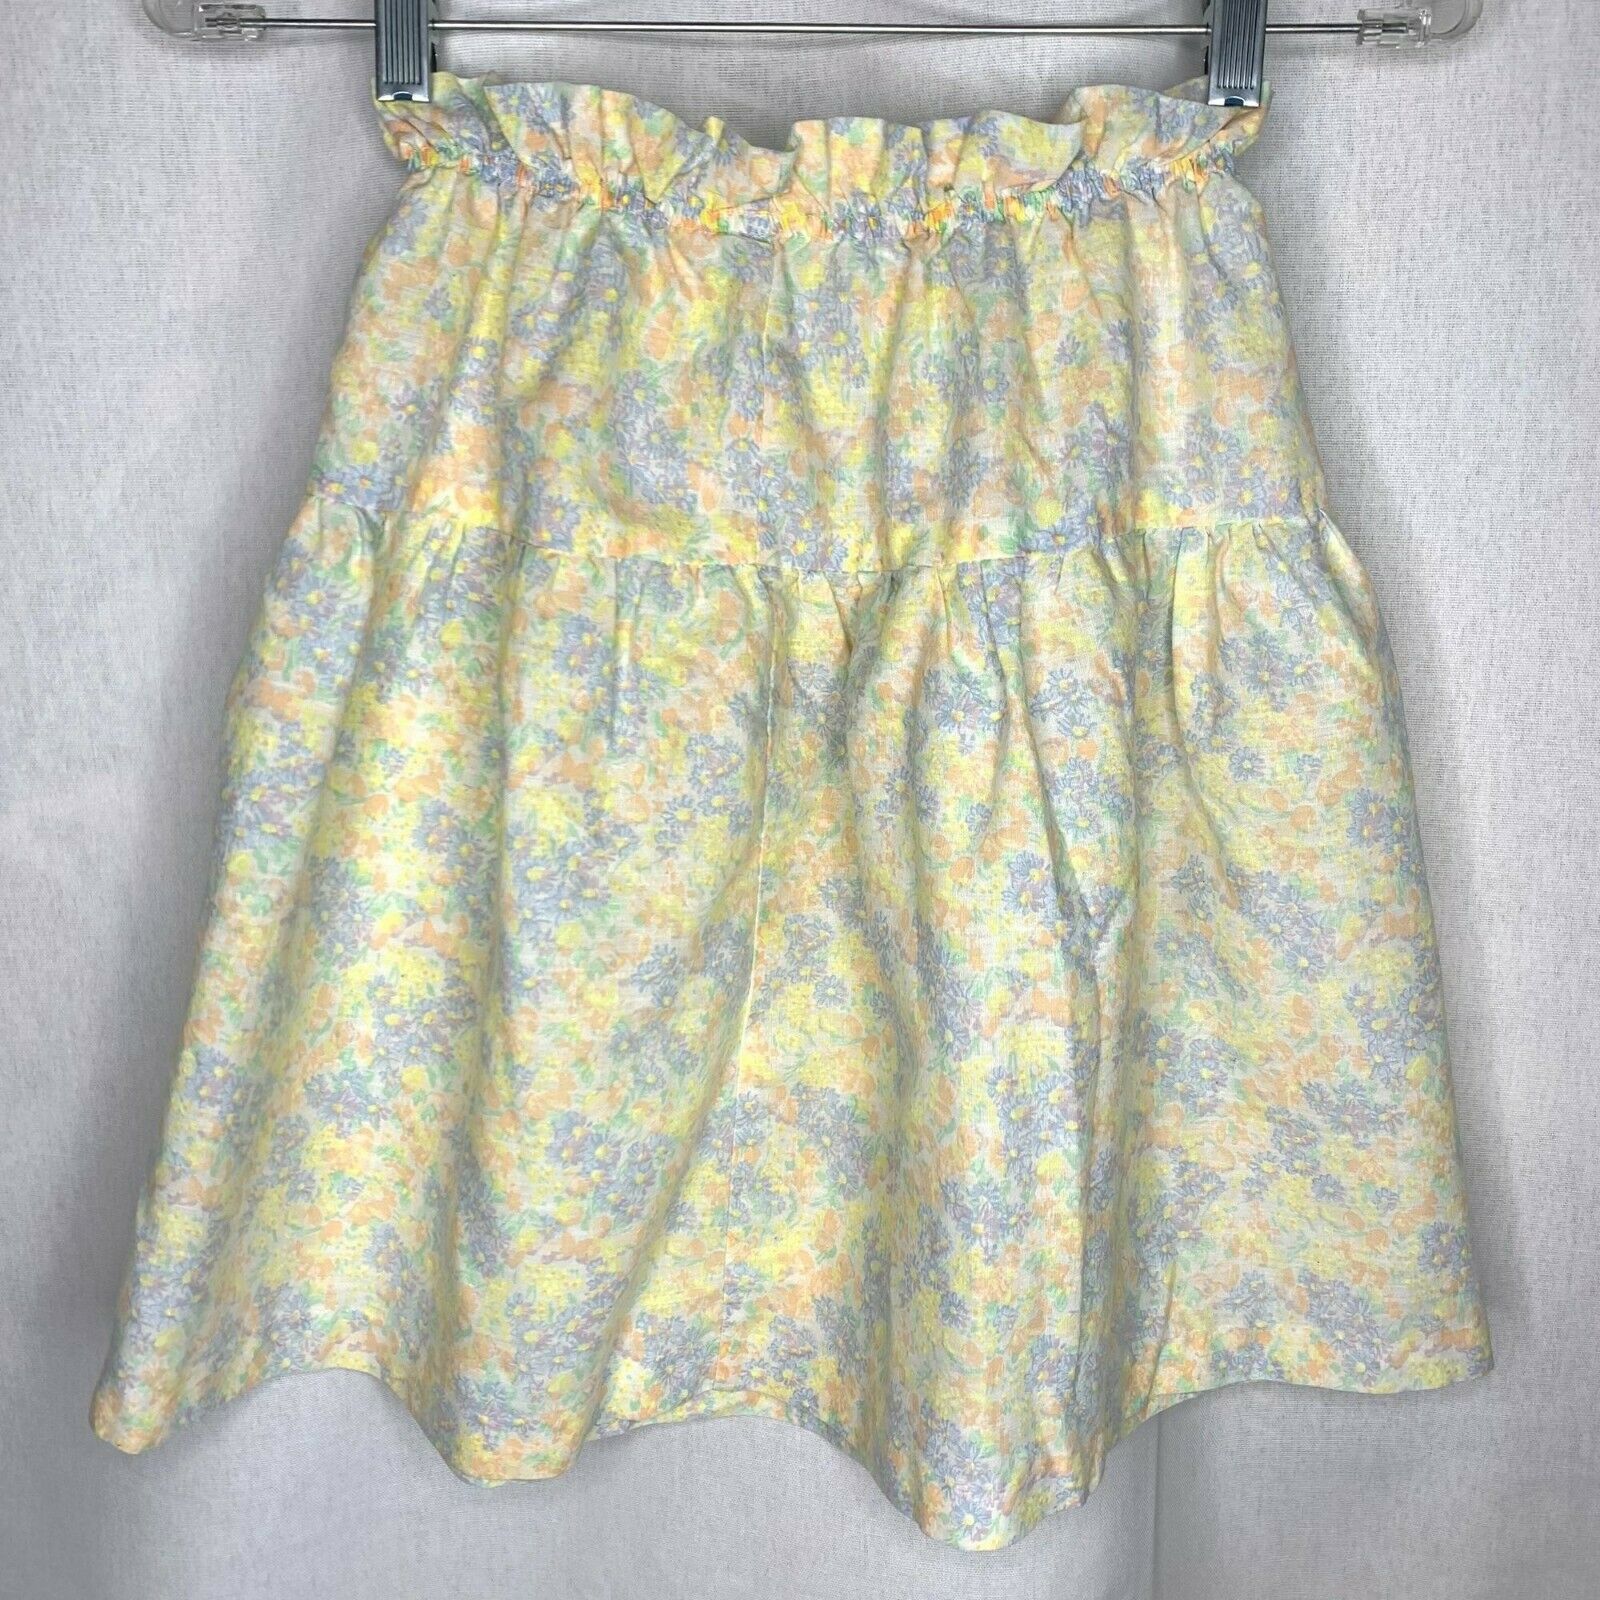 Vintage 70s Cottagecore Prairie Ruffle Skirt by Pandora Size 10 Yellow Blue